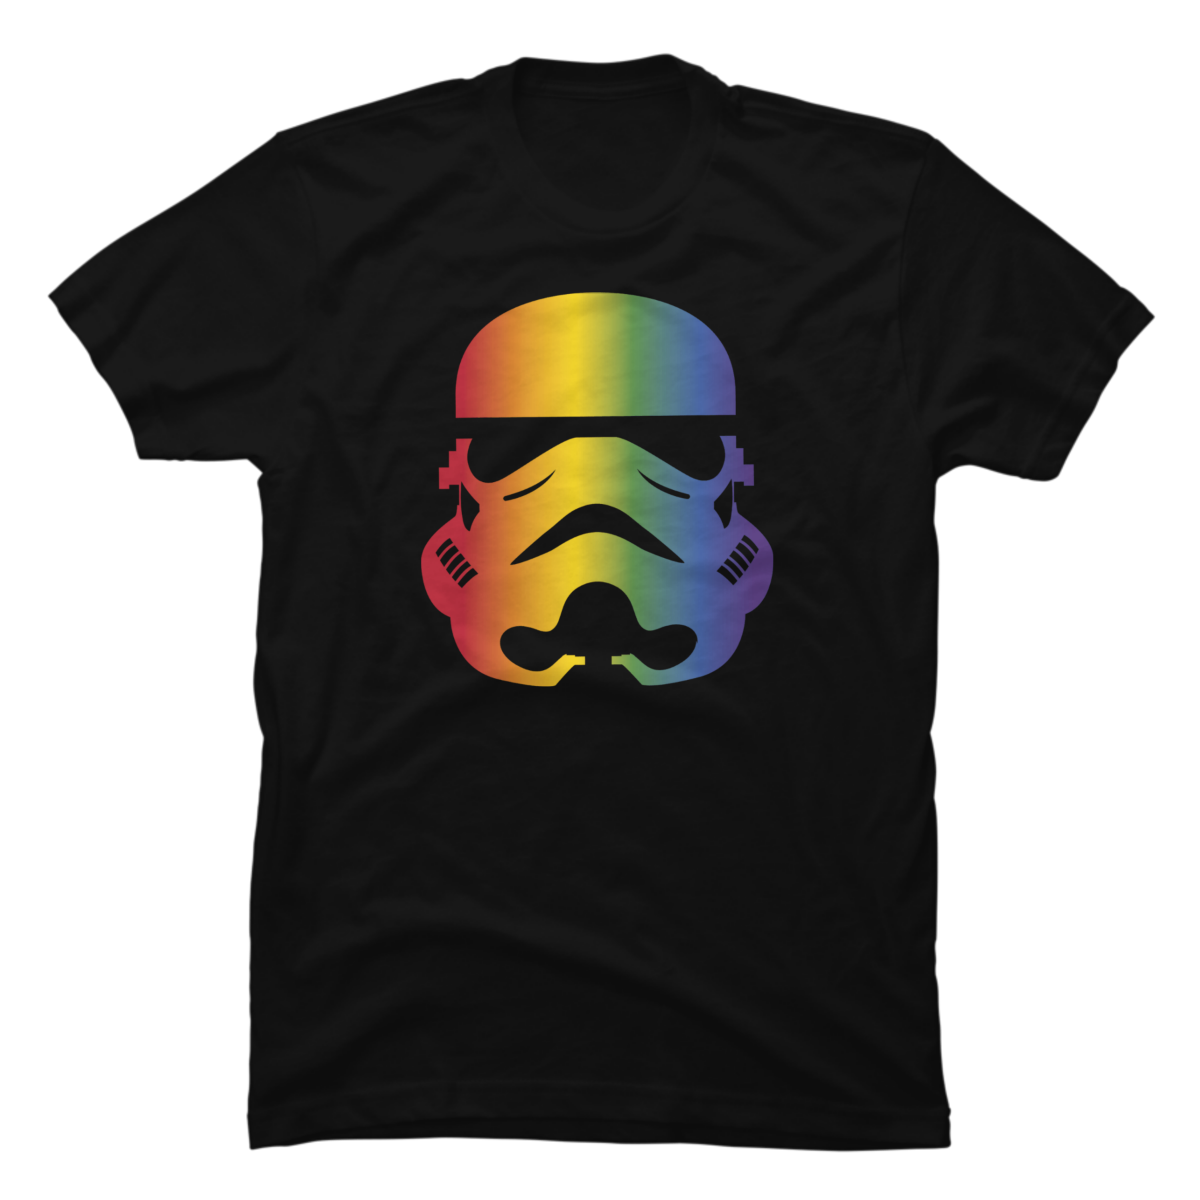 rainbow star wars shirt